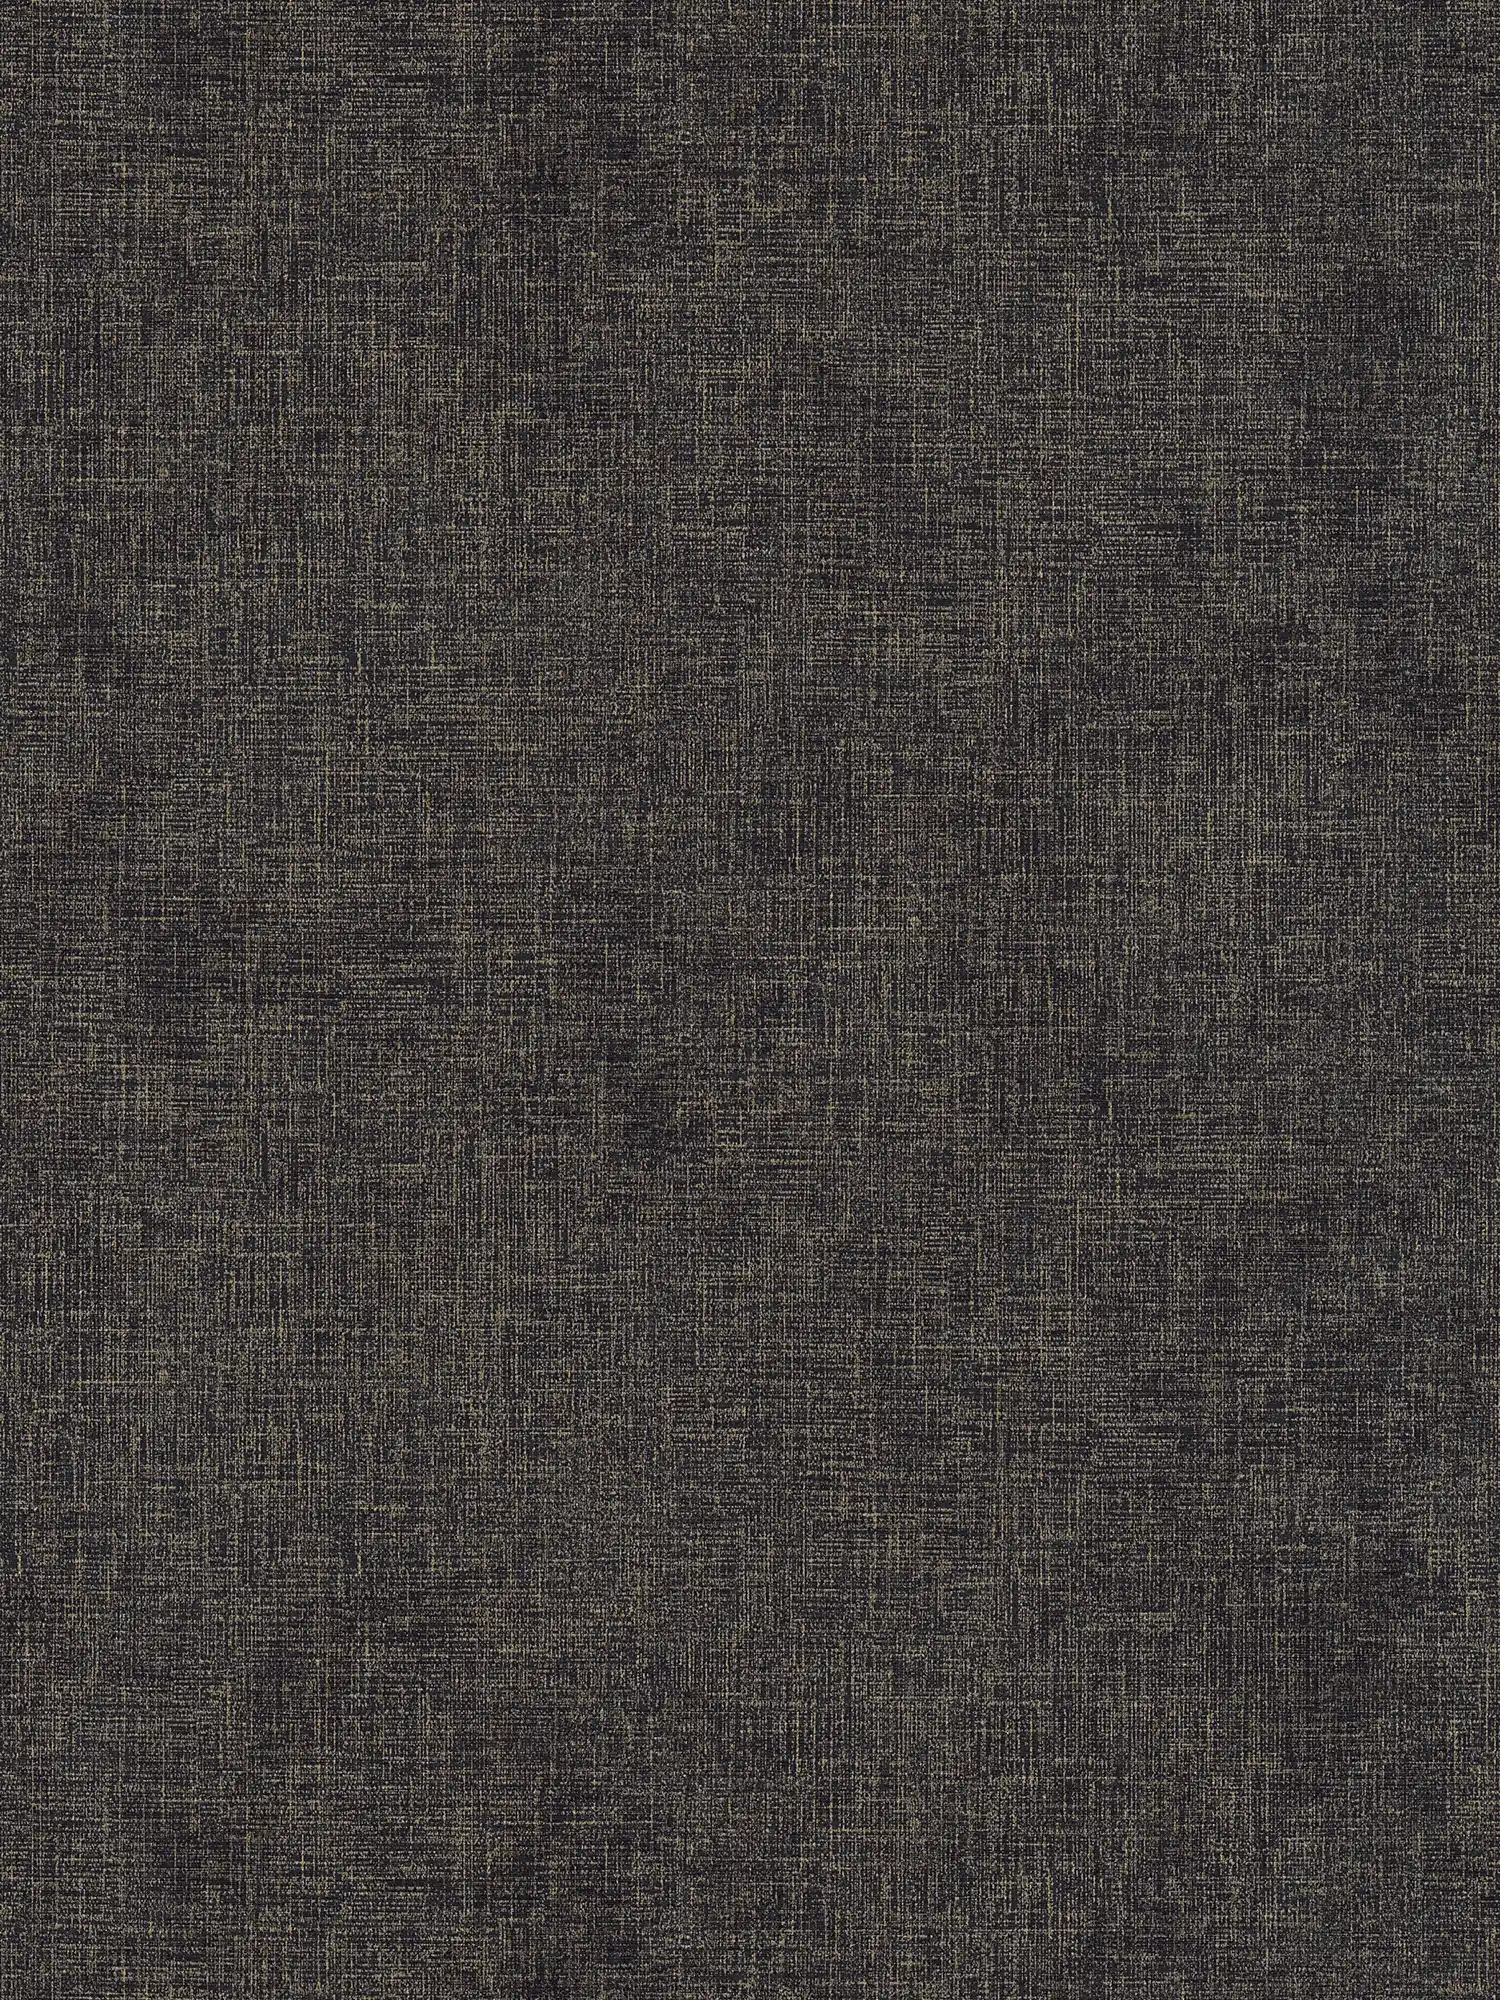 Black linen look wallpaper - Black
